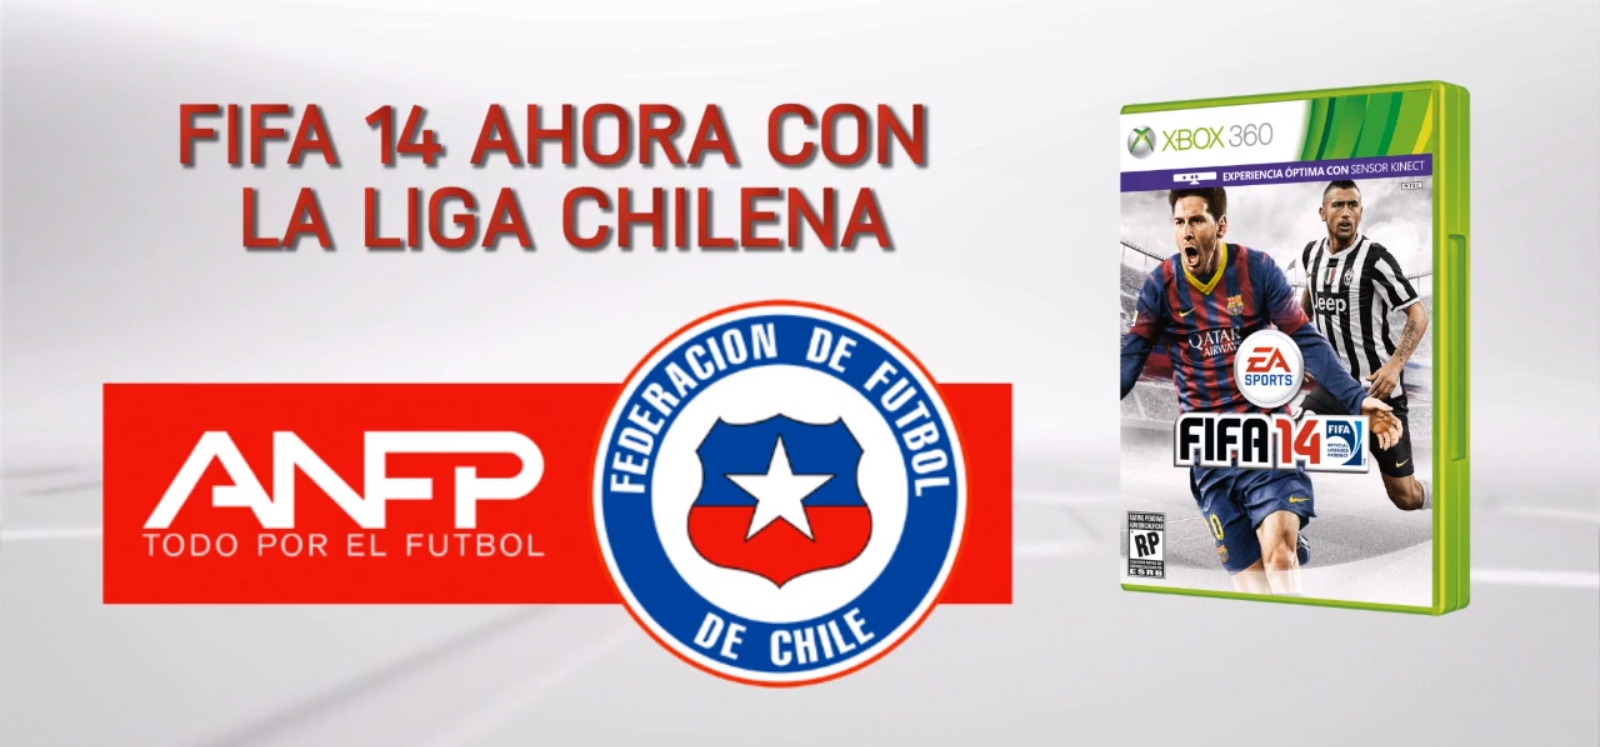 《FIFA14》获得智利联赛授权 18只球队加入_